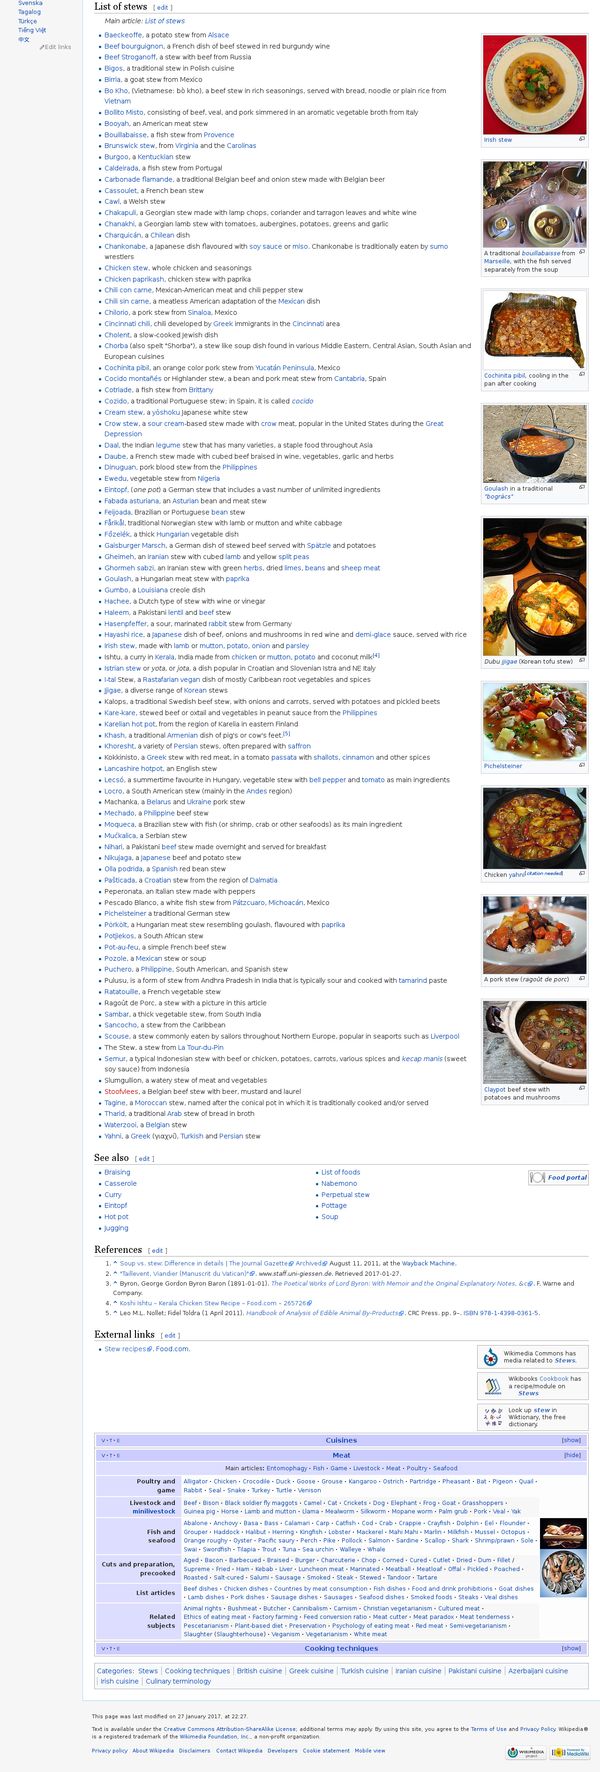 Stew - Wikipedia